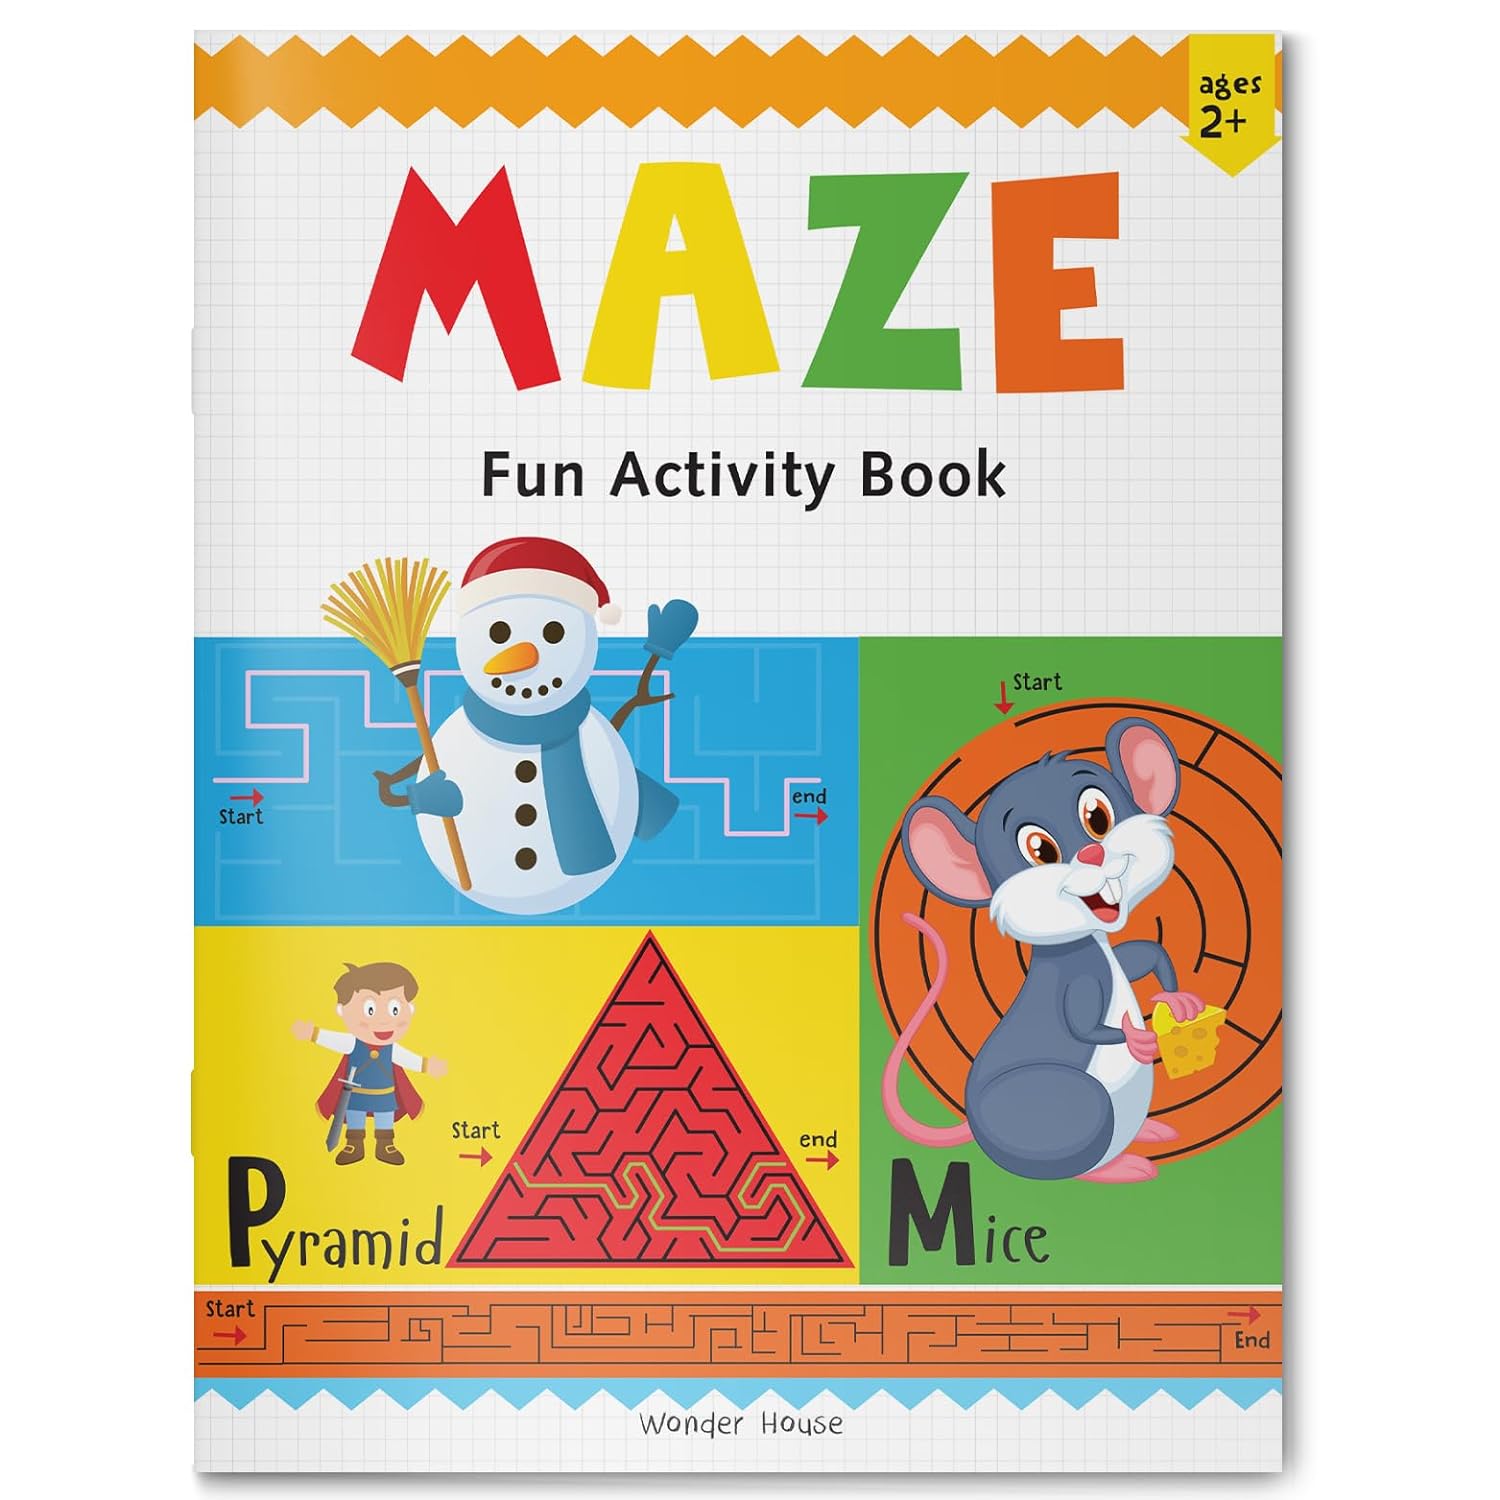 Maze - Fun Activity Book For Age 2+